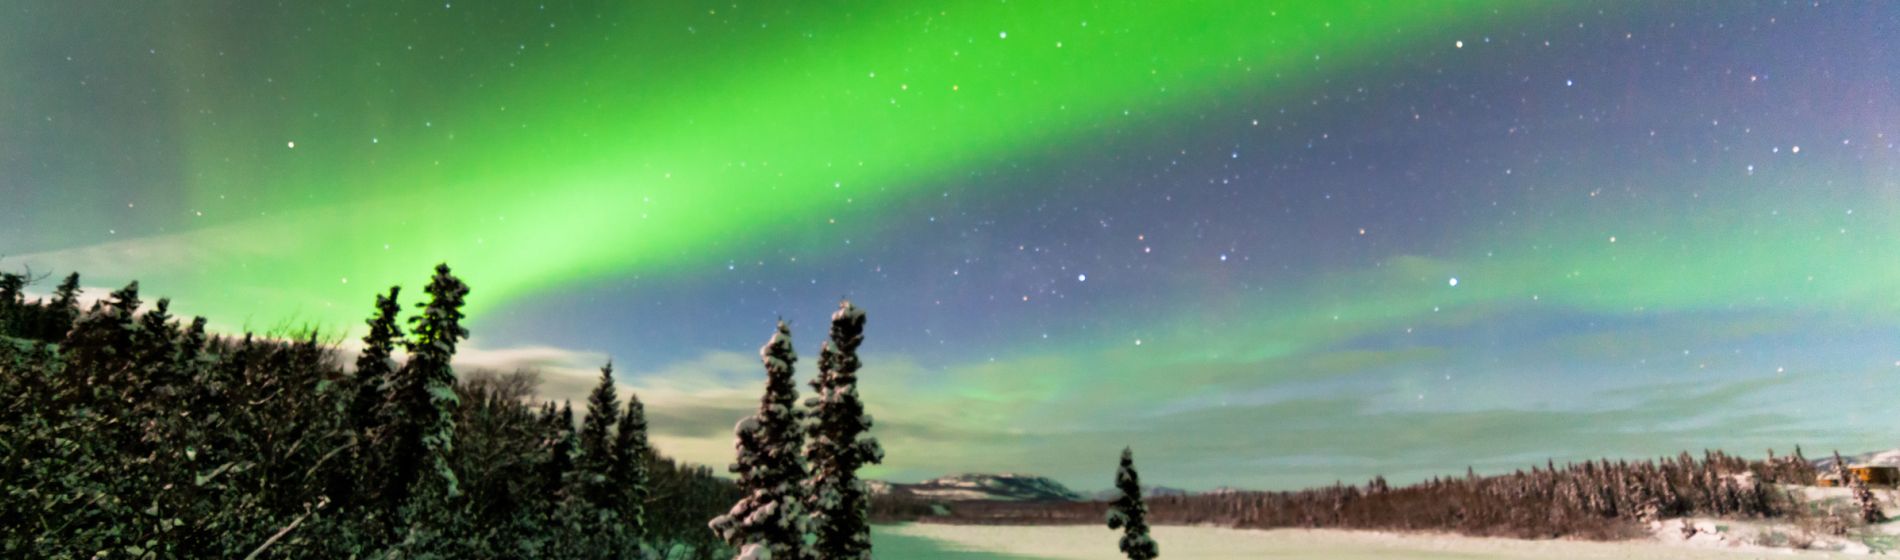 aurora_borealis_over_snowy_winter_landscape_of_frozen_lake_laberge_yukon_territory_canada.jpg